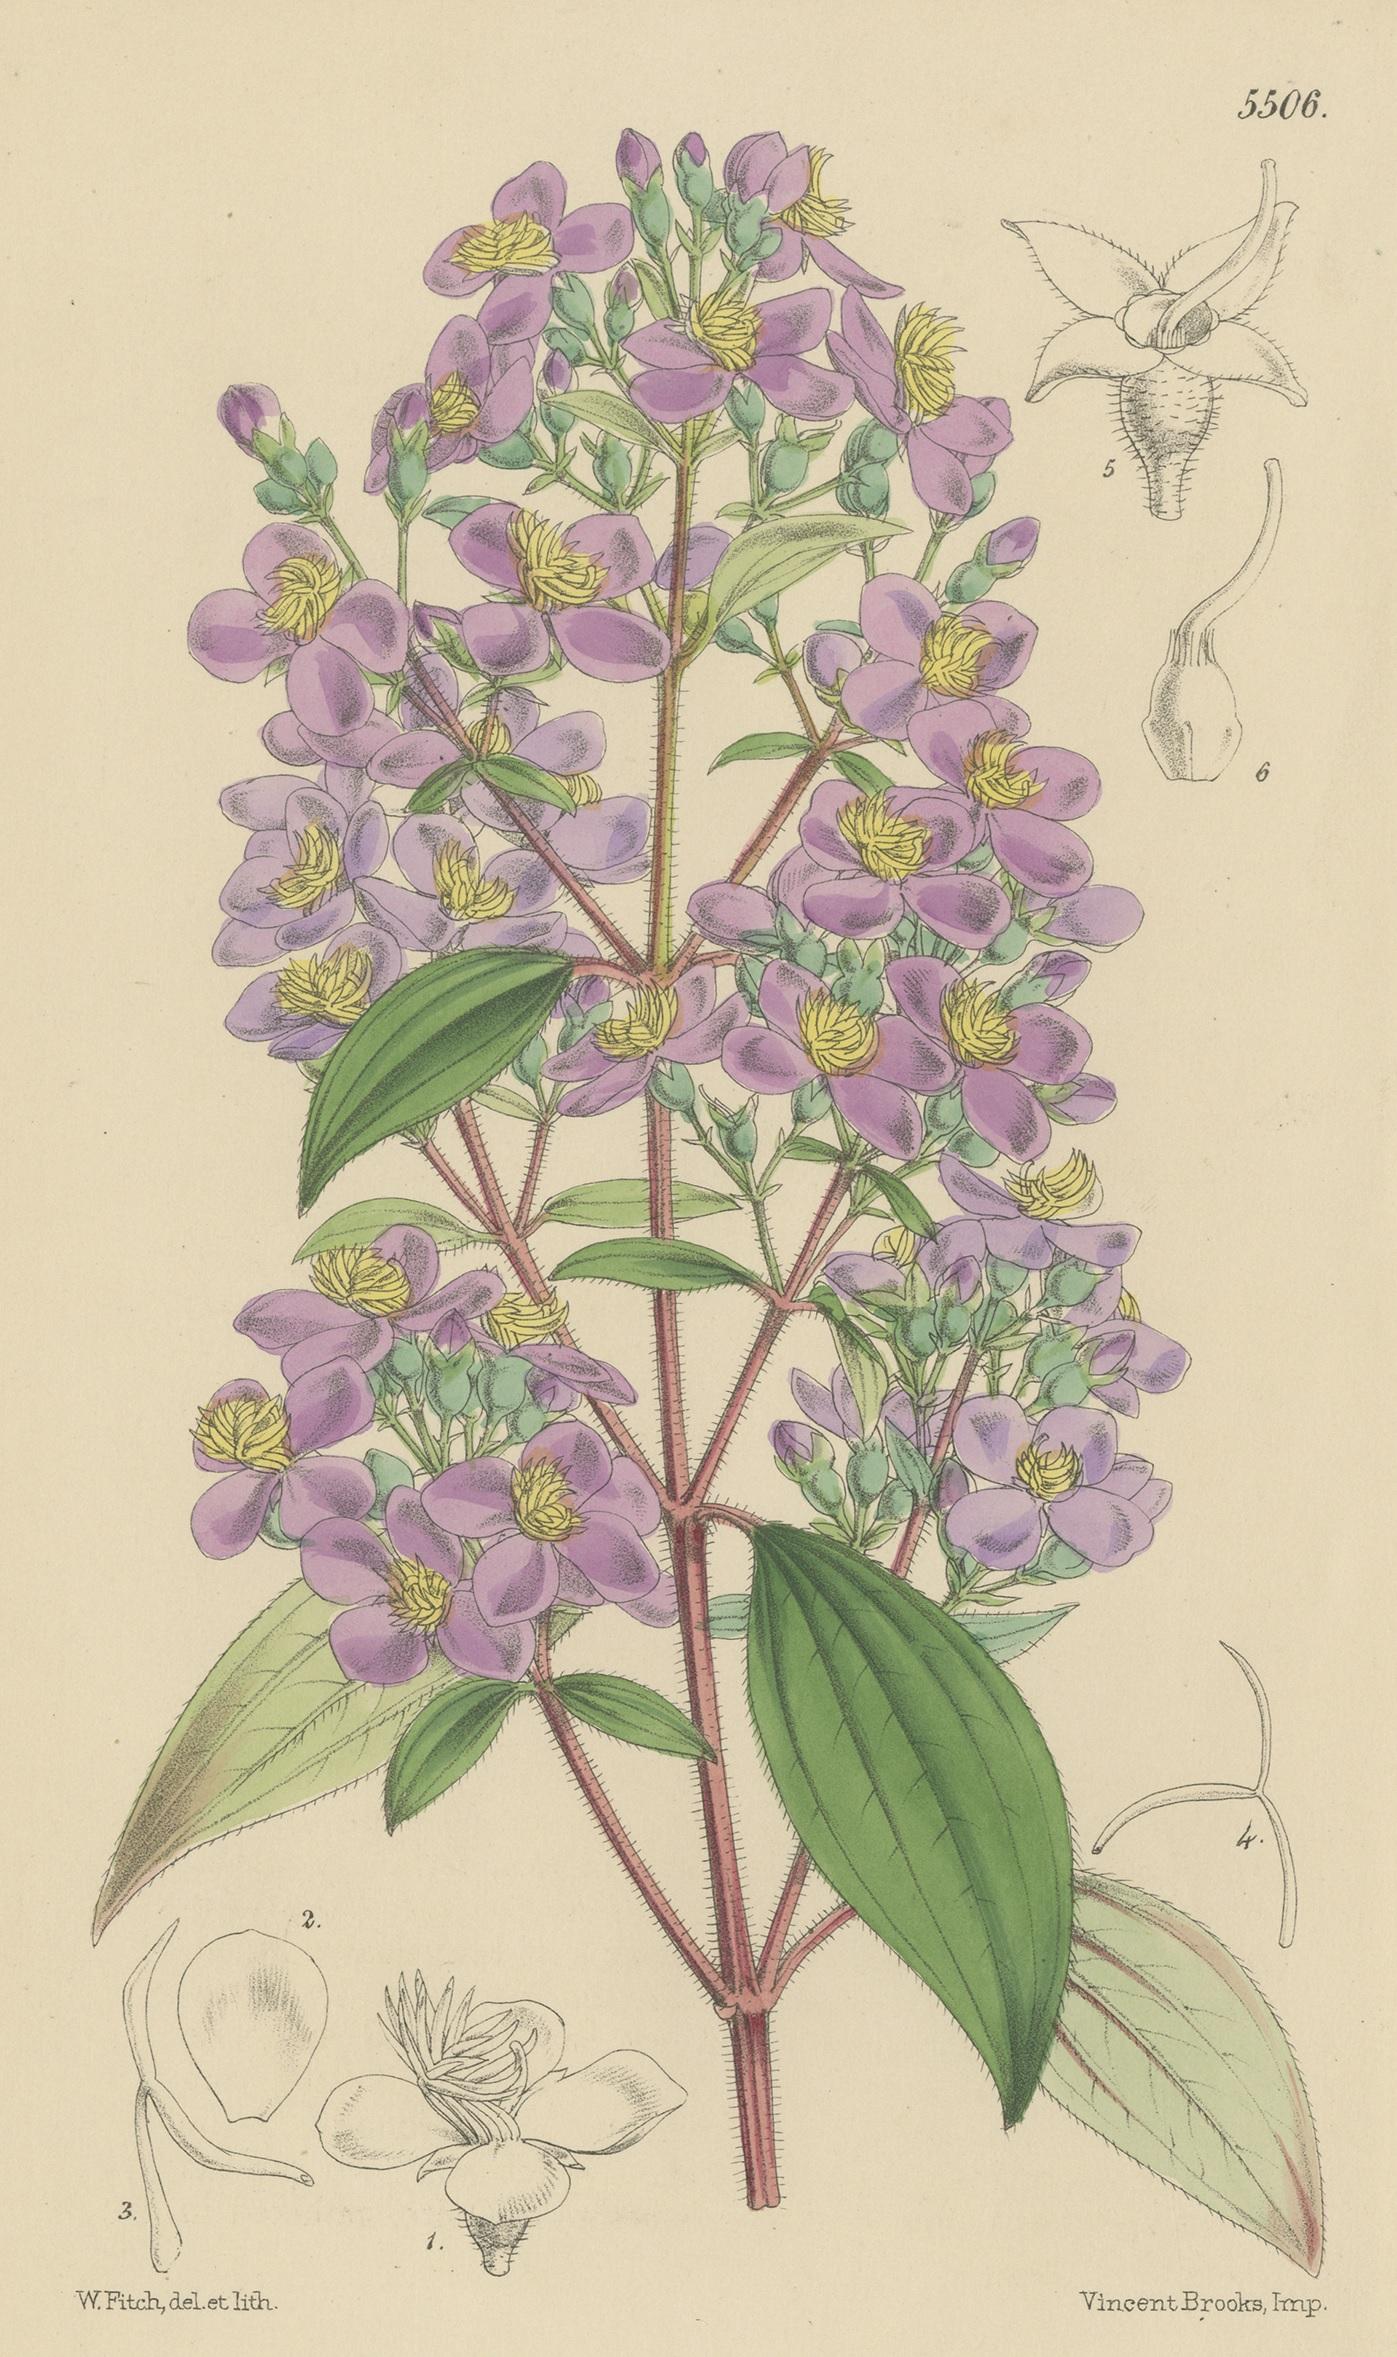 Botany print of monochaetum dicranantherum, a species of flowering plant. This print originates from volume 91 of 'W. Curtis's Botanical Magazine'.